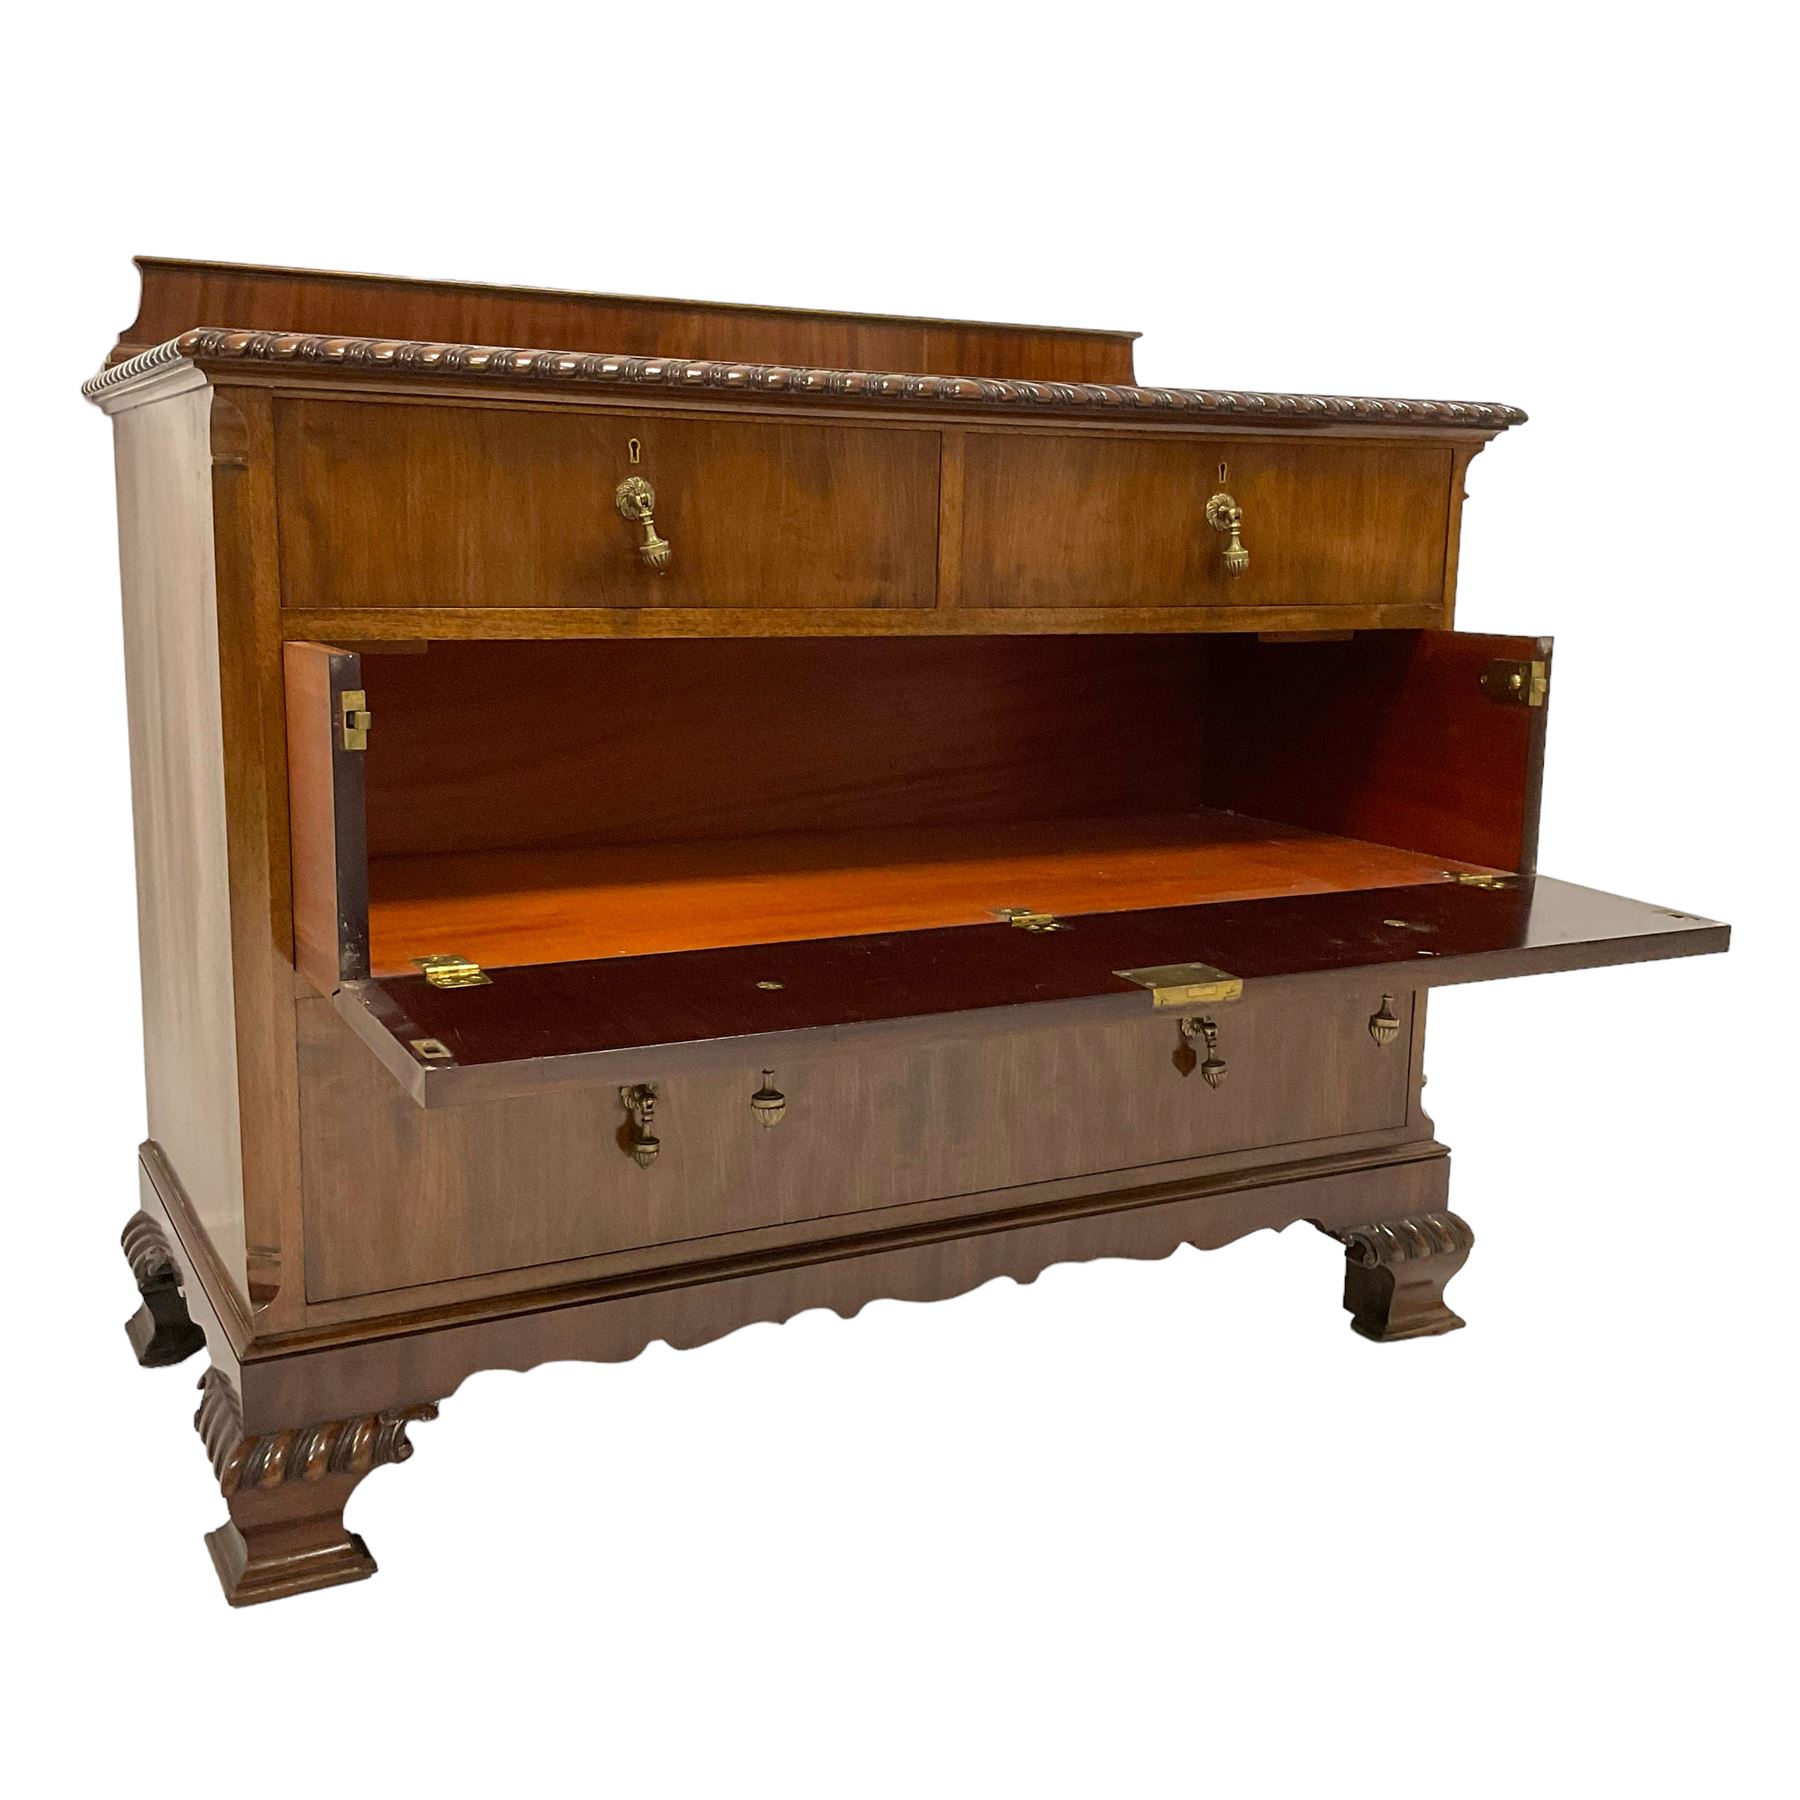 Mid-20th century mahogany linen chest - Image 5 of 7